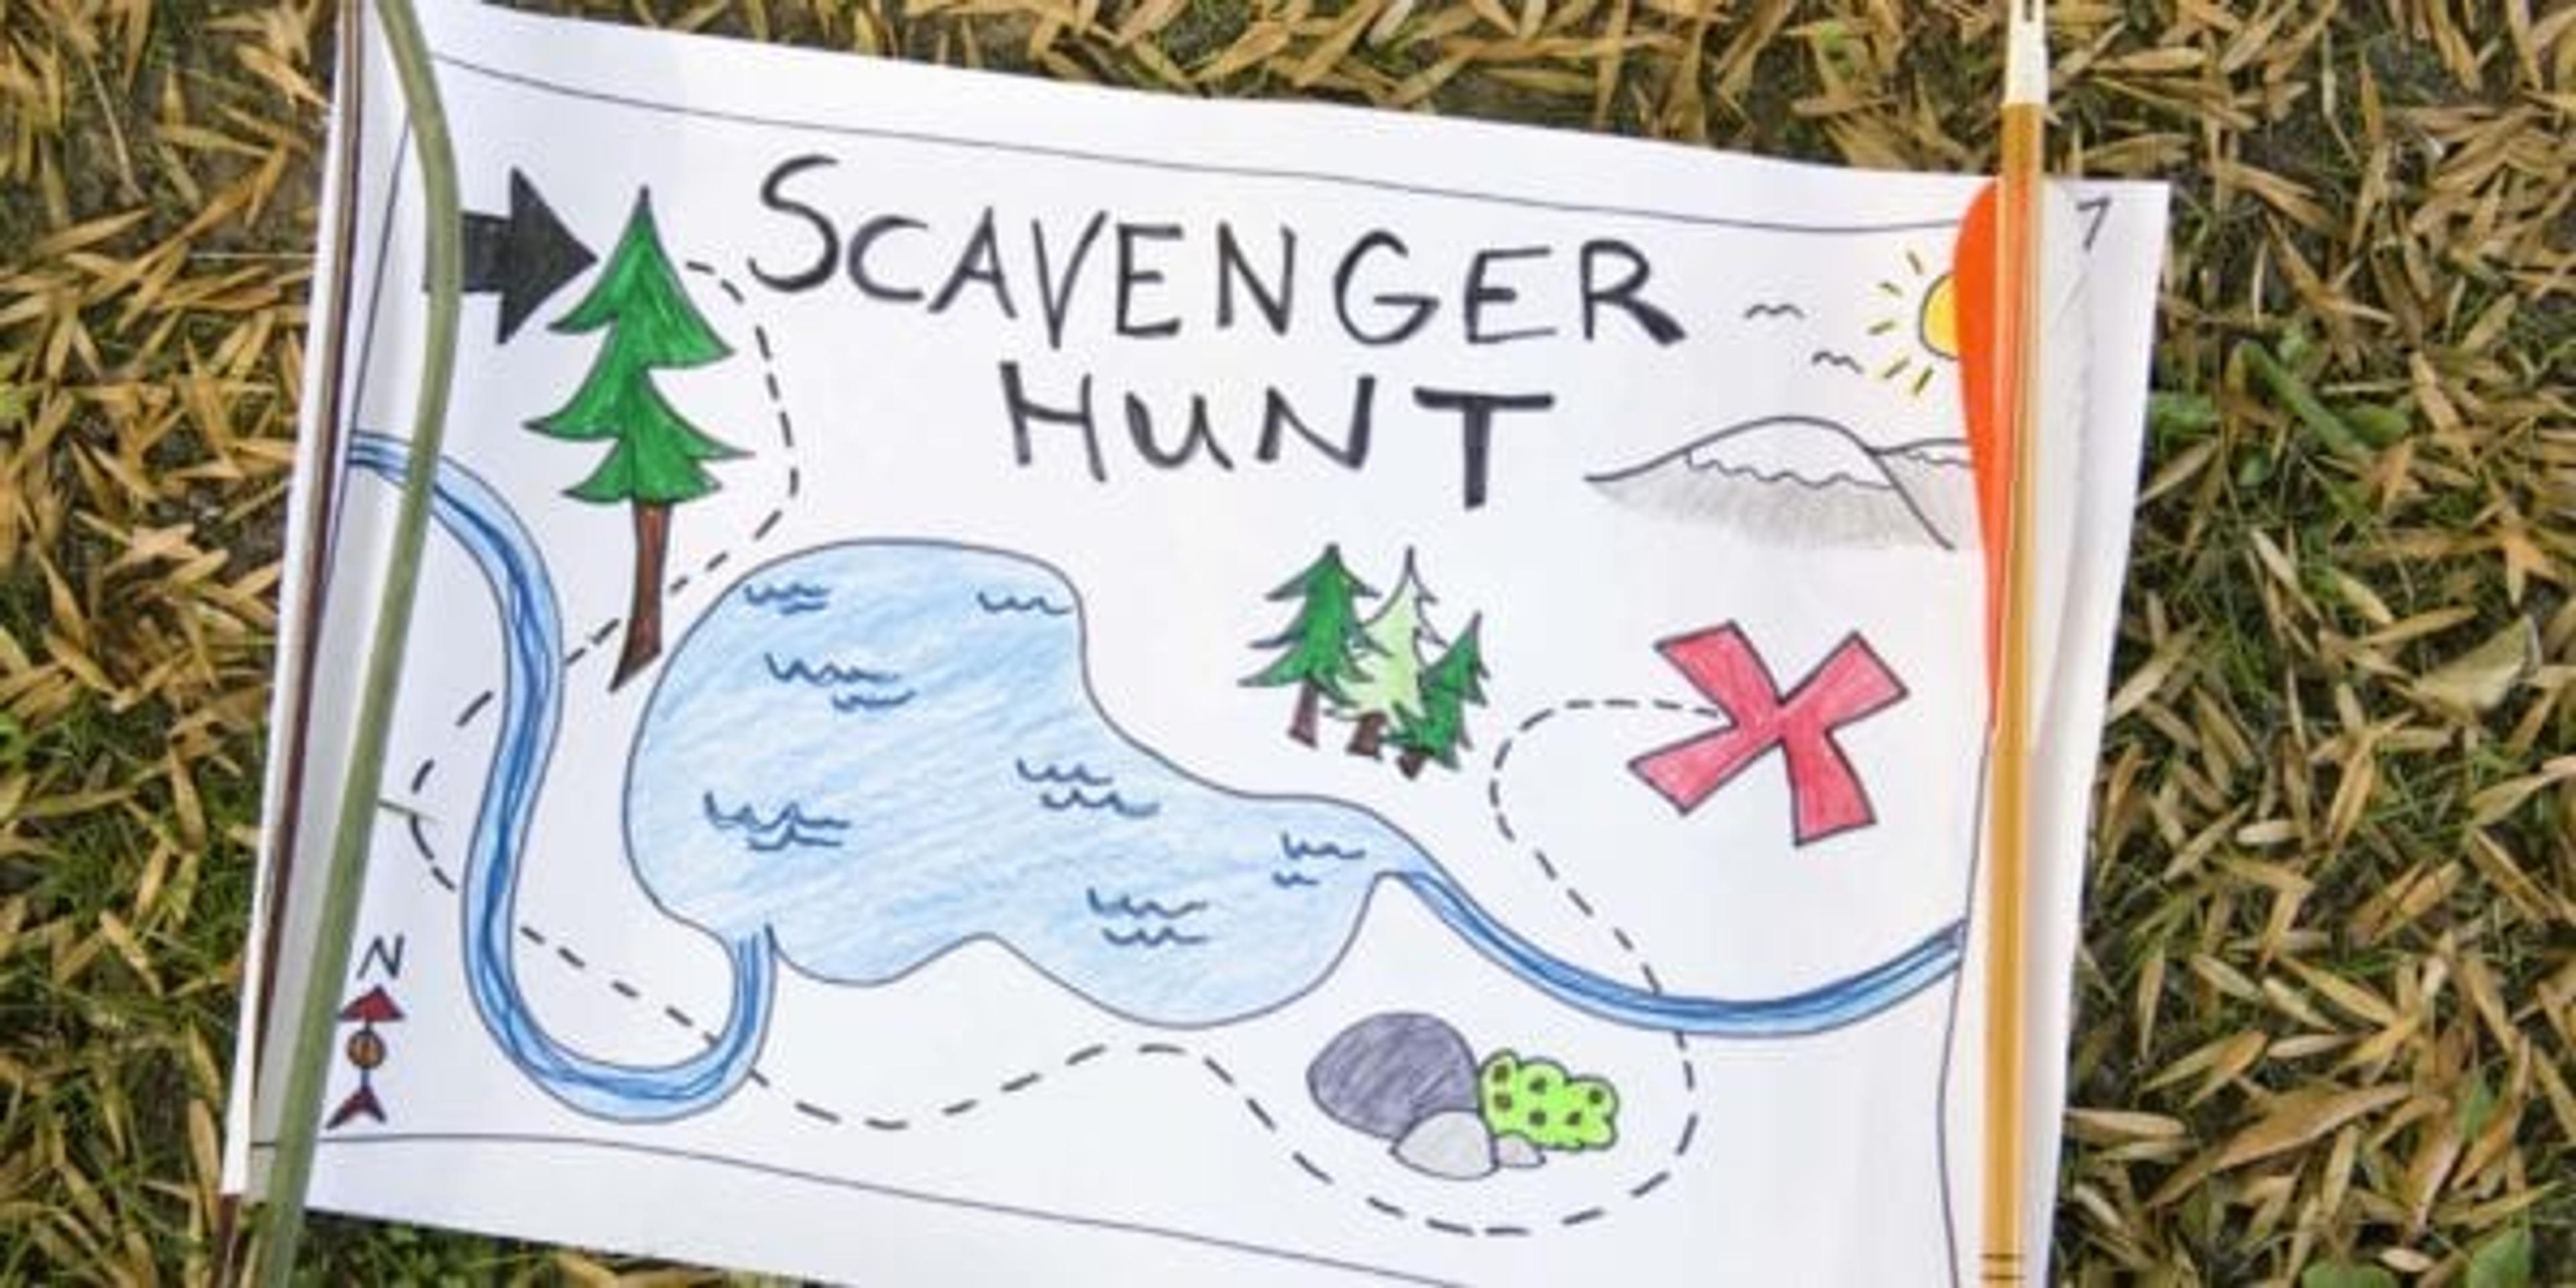 Scavenger Hunt List For Adults